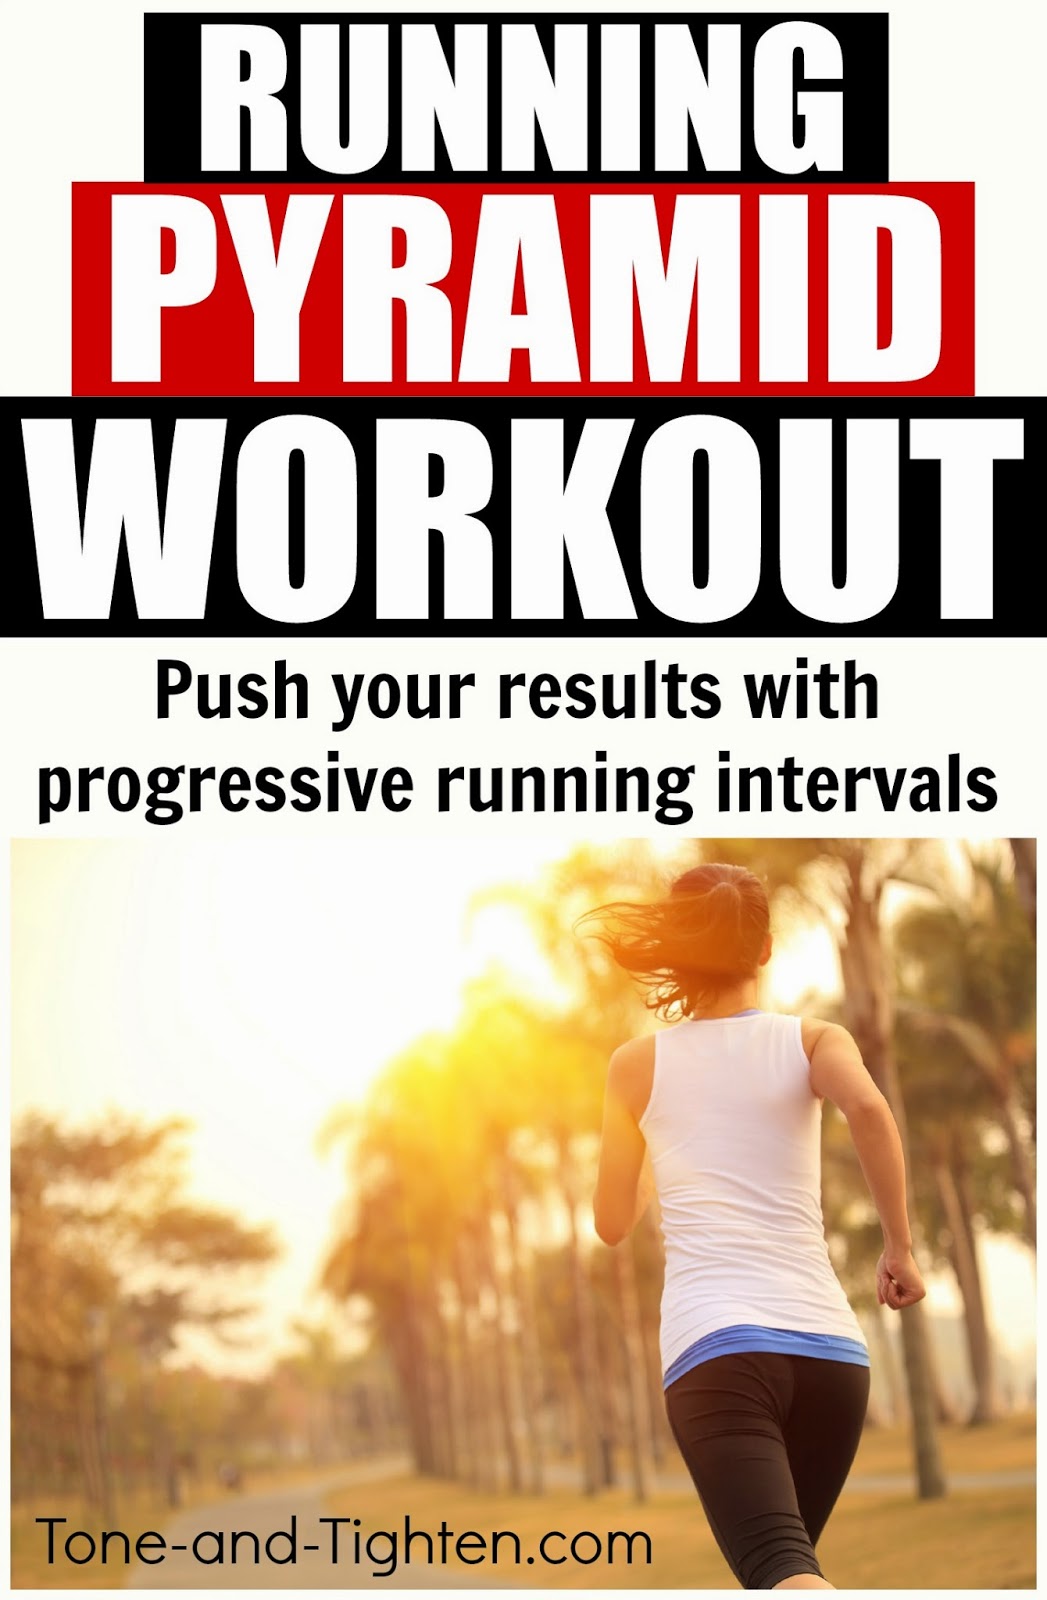 Running pyramid workout to burn calories